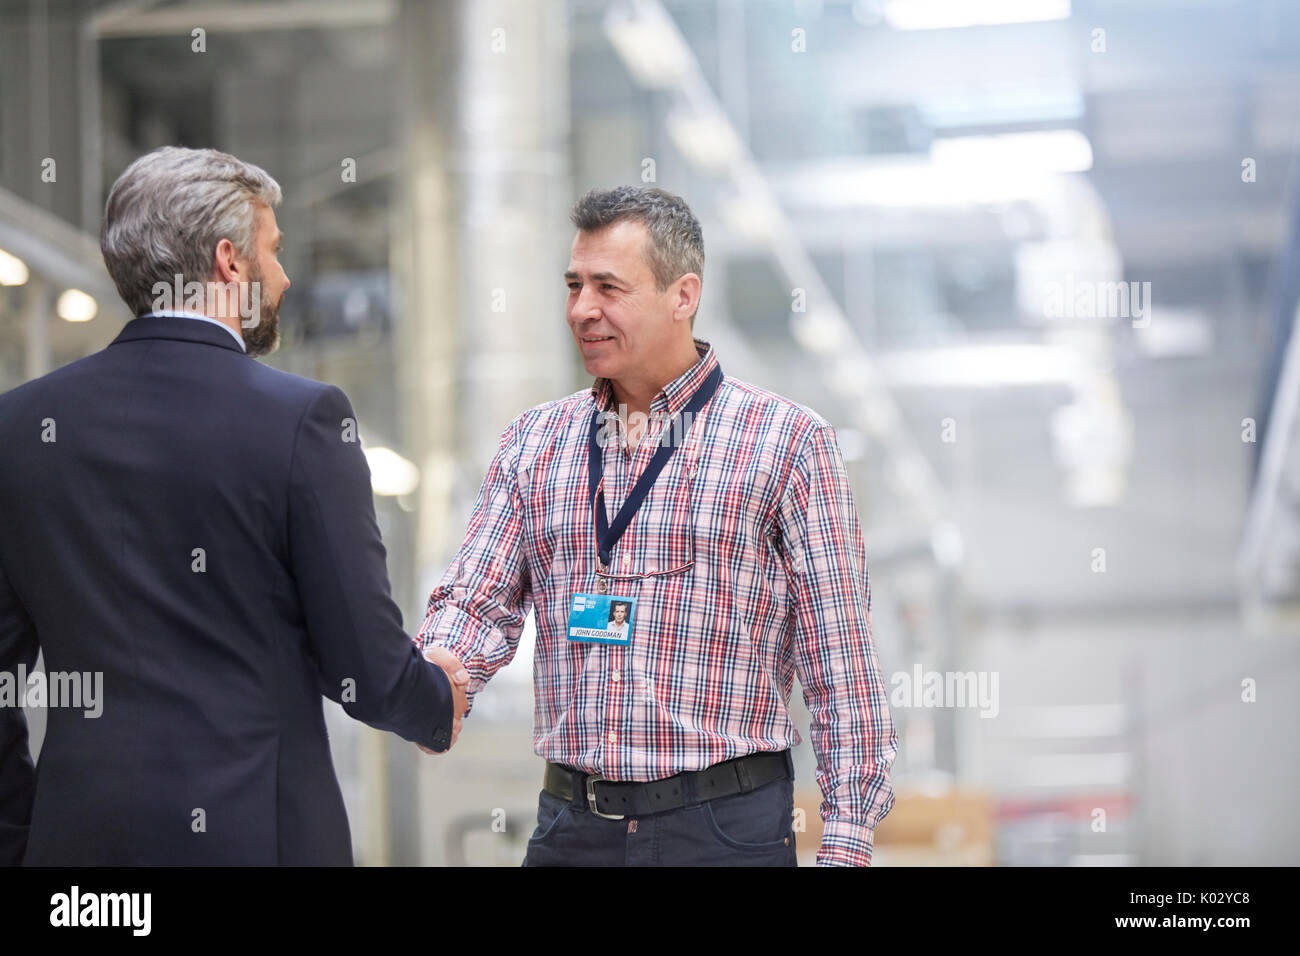 Businessman et superviseur handshaking in factory Banque D'Images